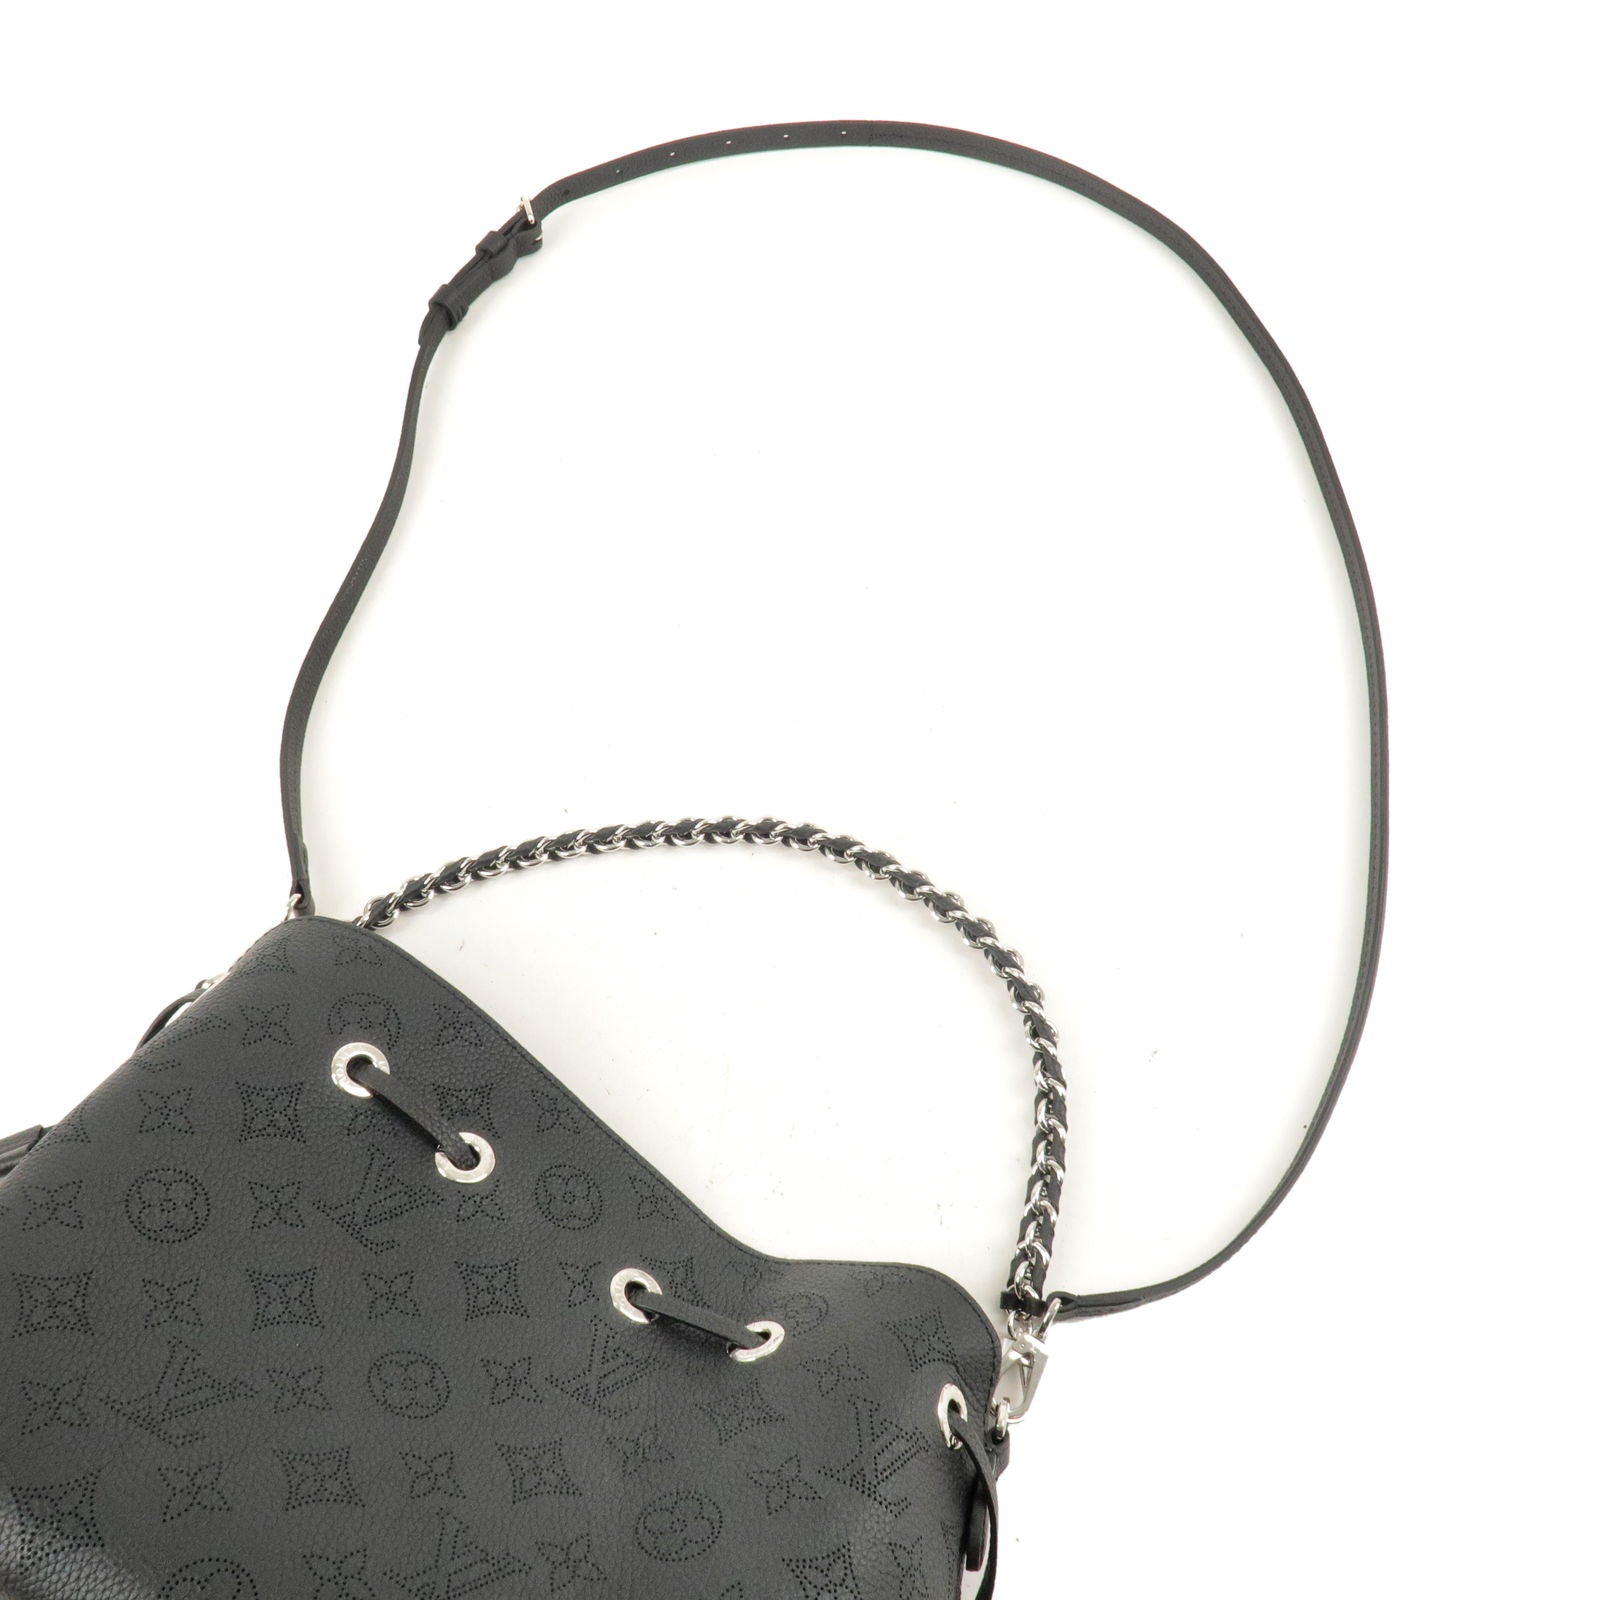 LOUIS VUITTON Bella Mahina Calf Leather Crossbody Bag Black - 10% OFF